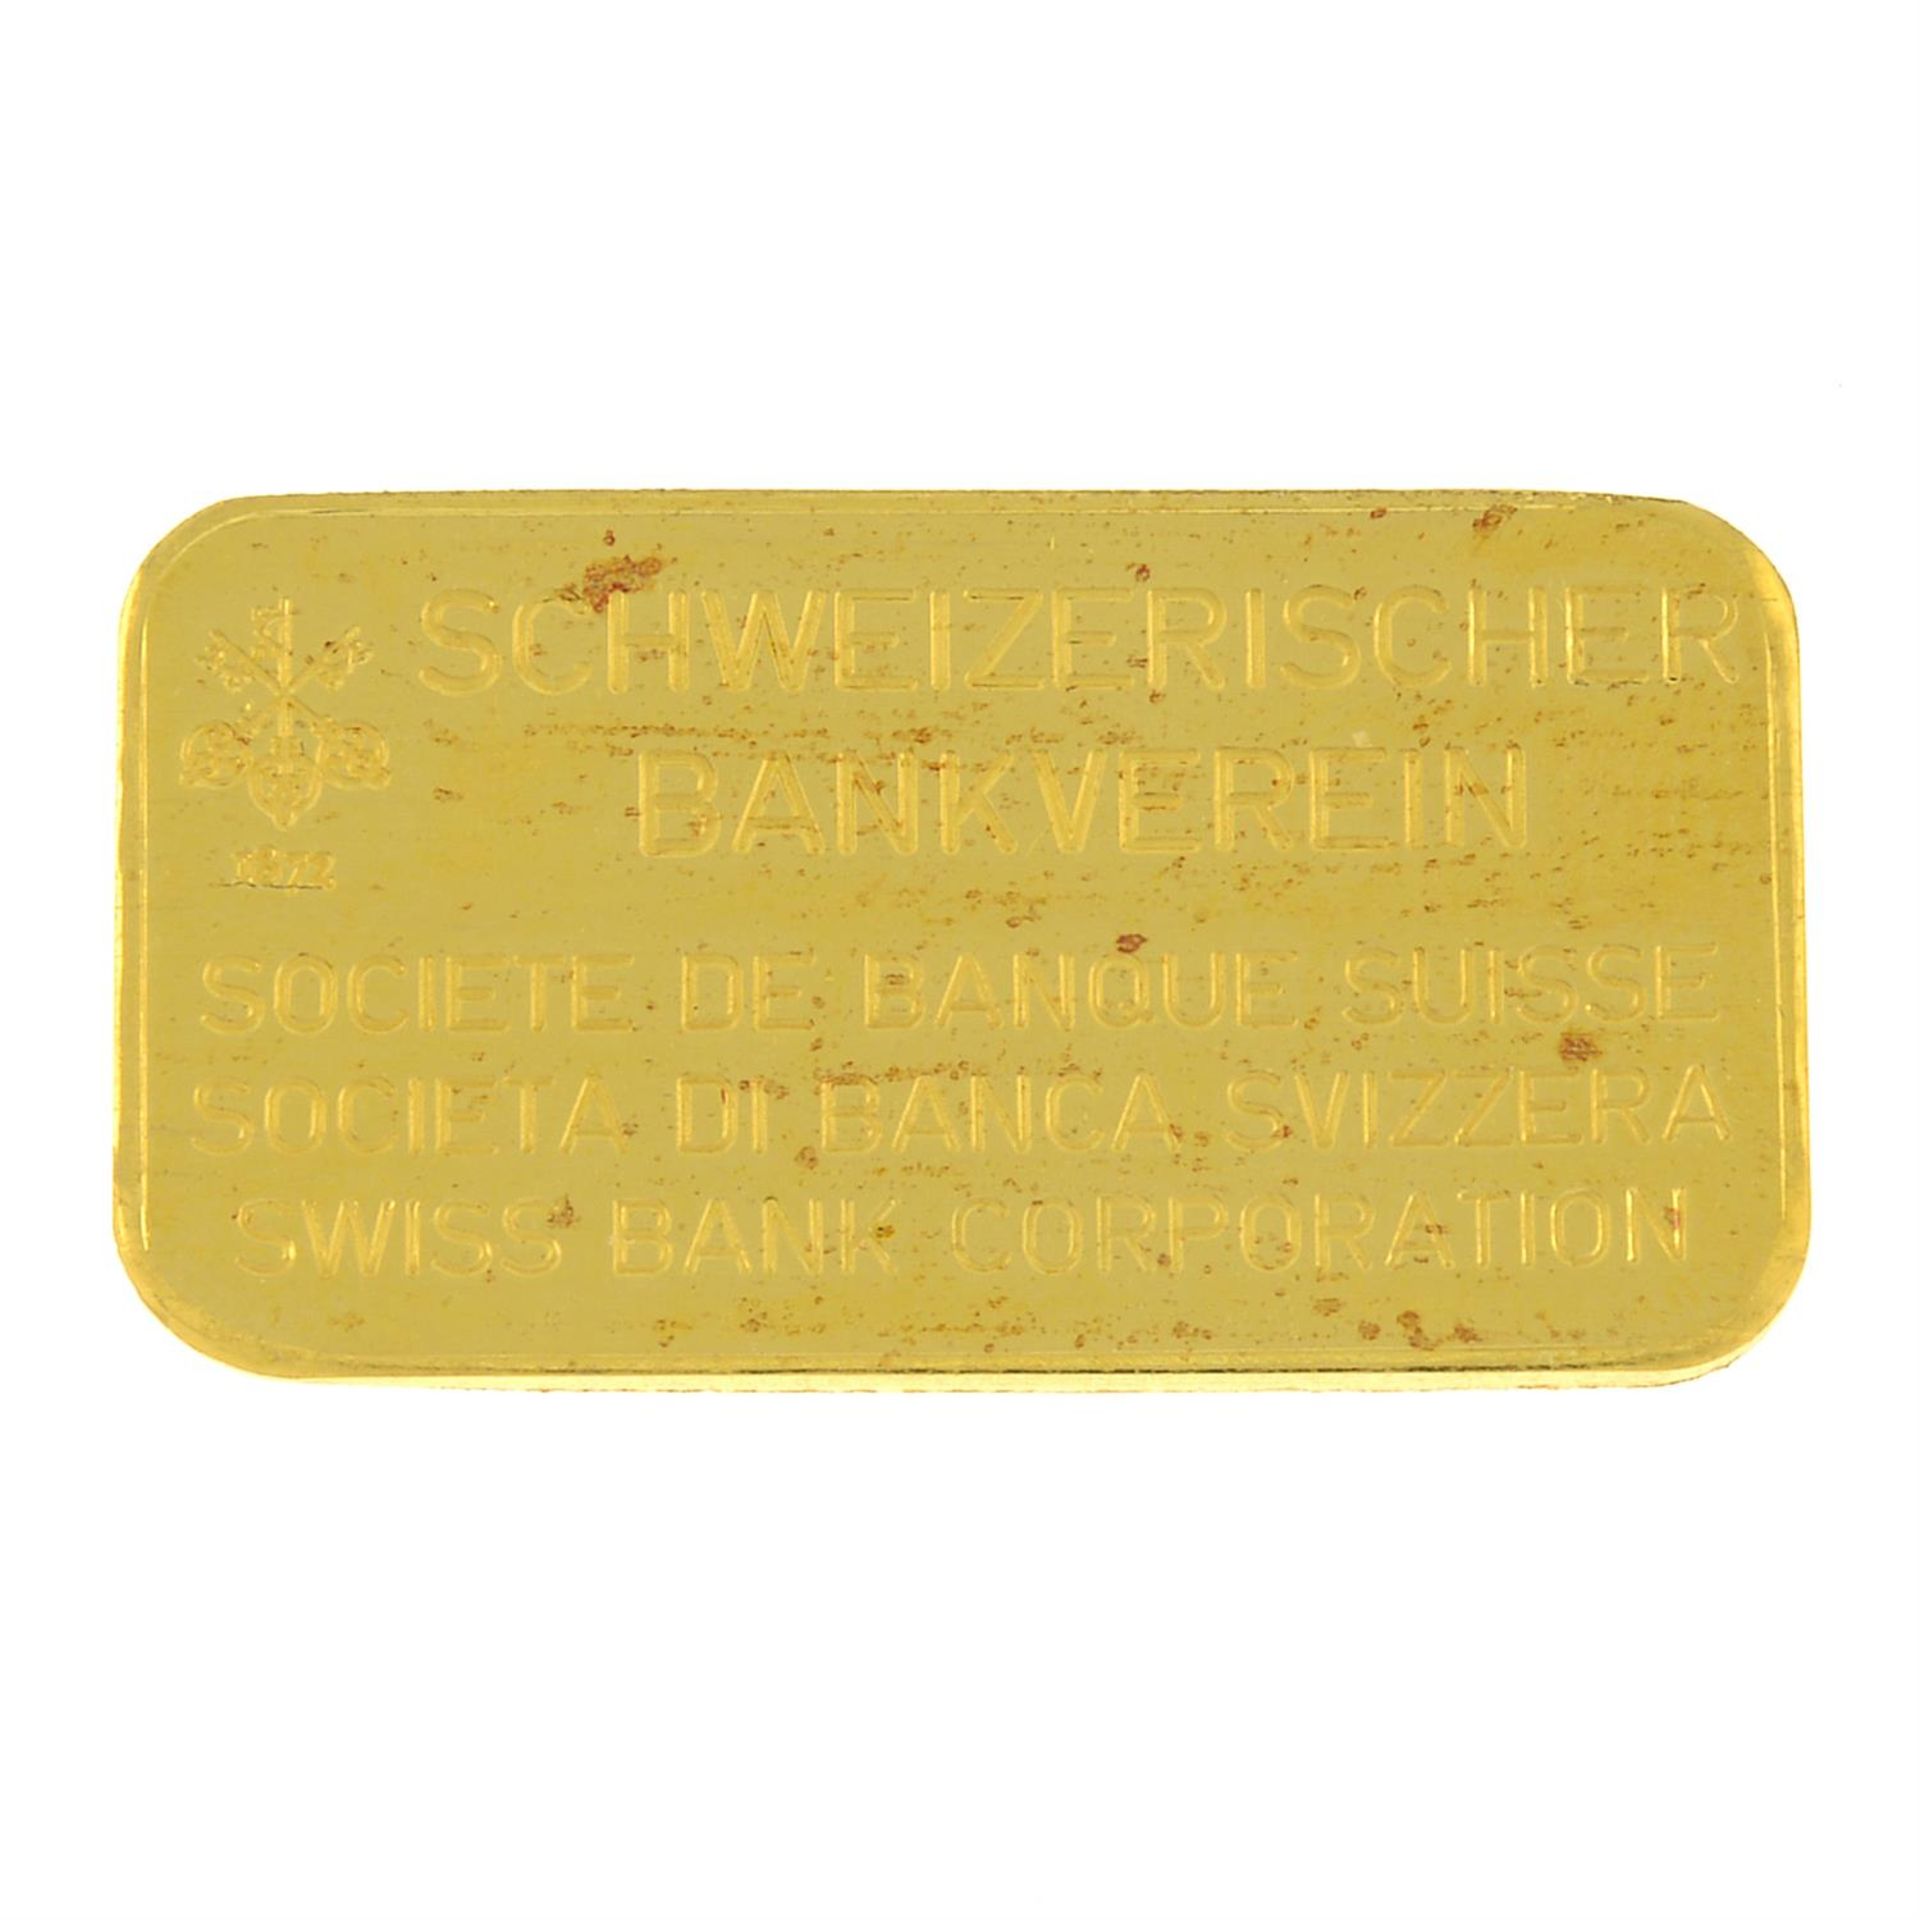 Switzerland, Swiss Bank Corporation, 10g fine gold bar.